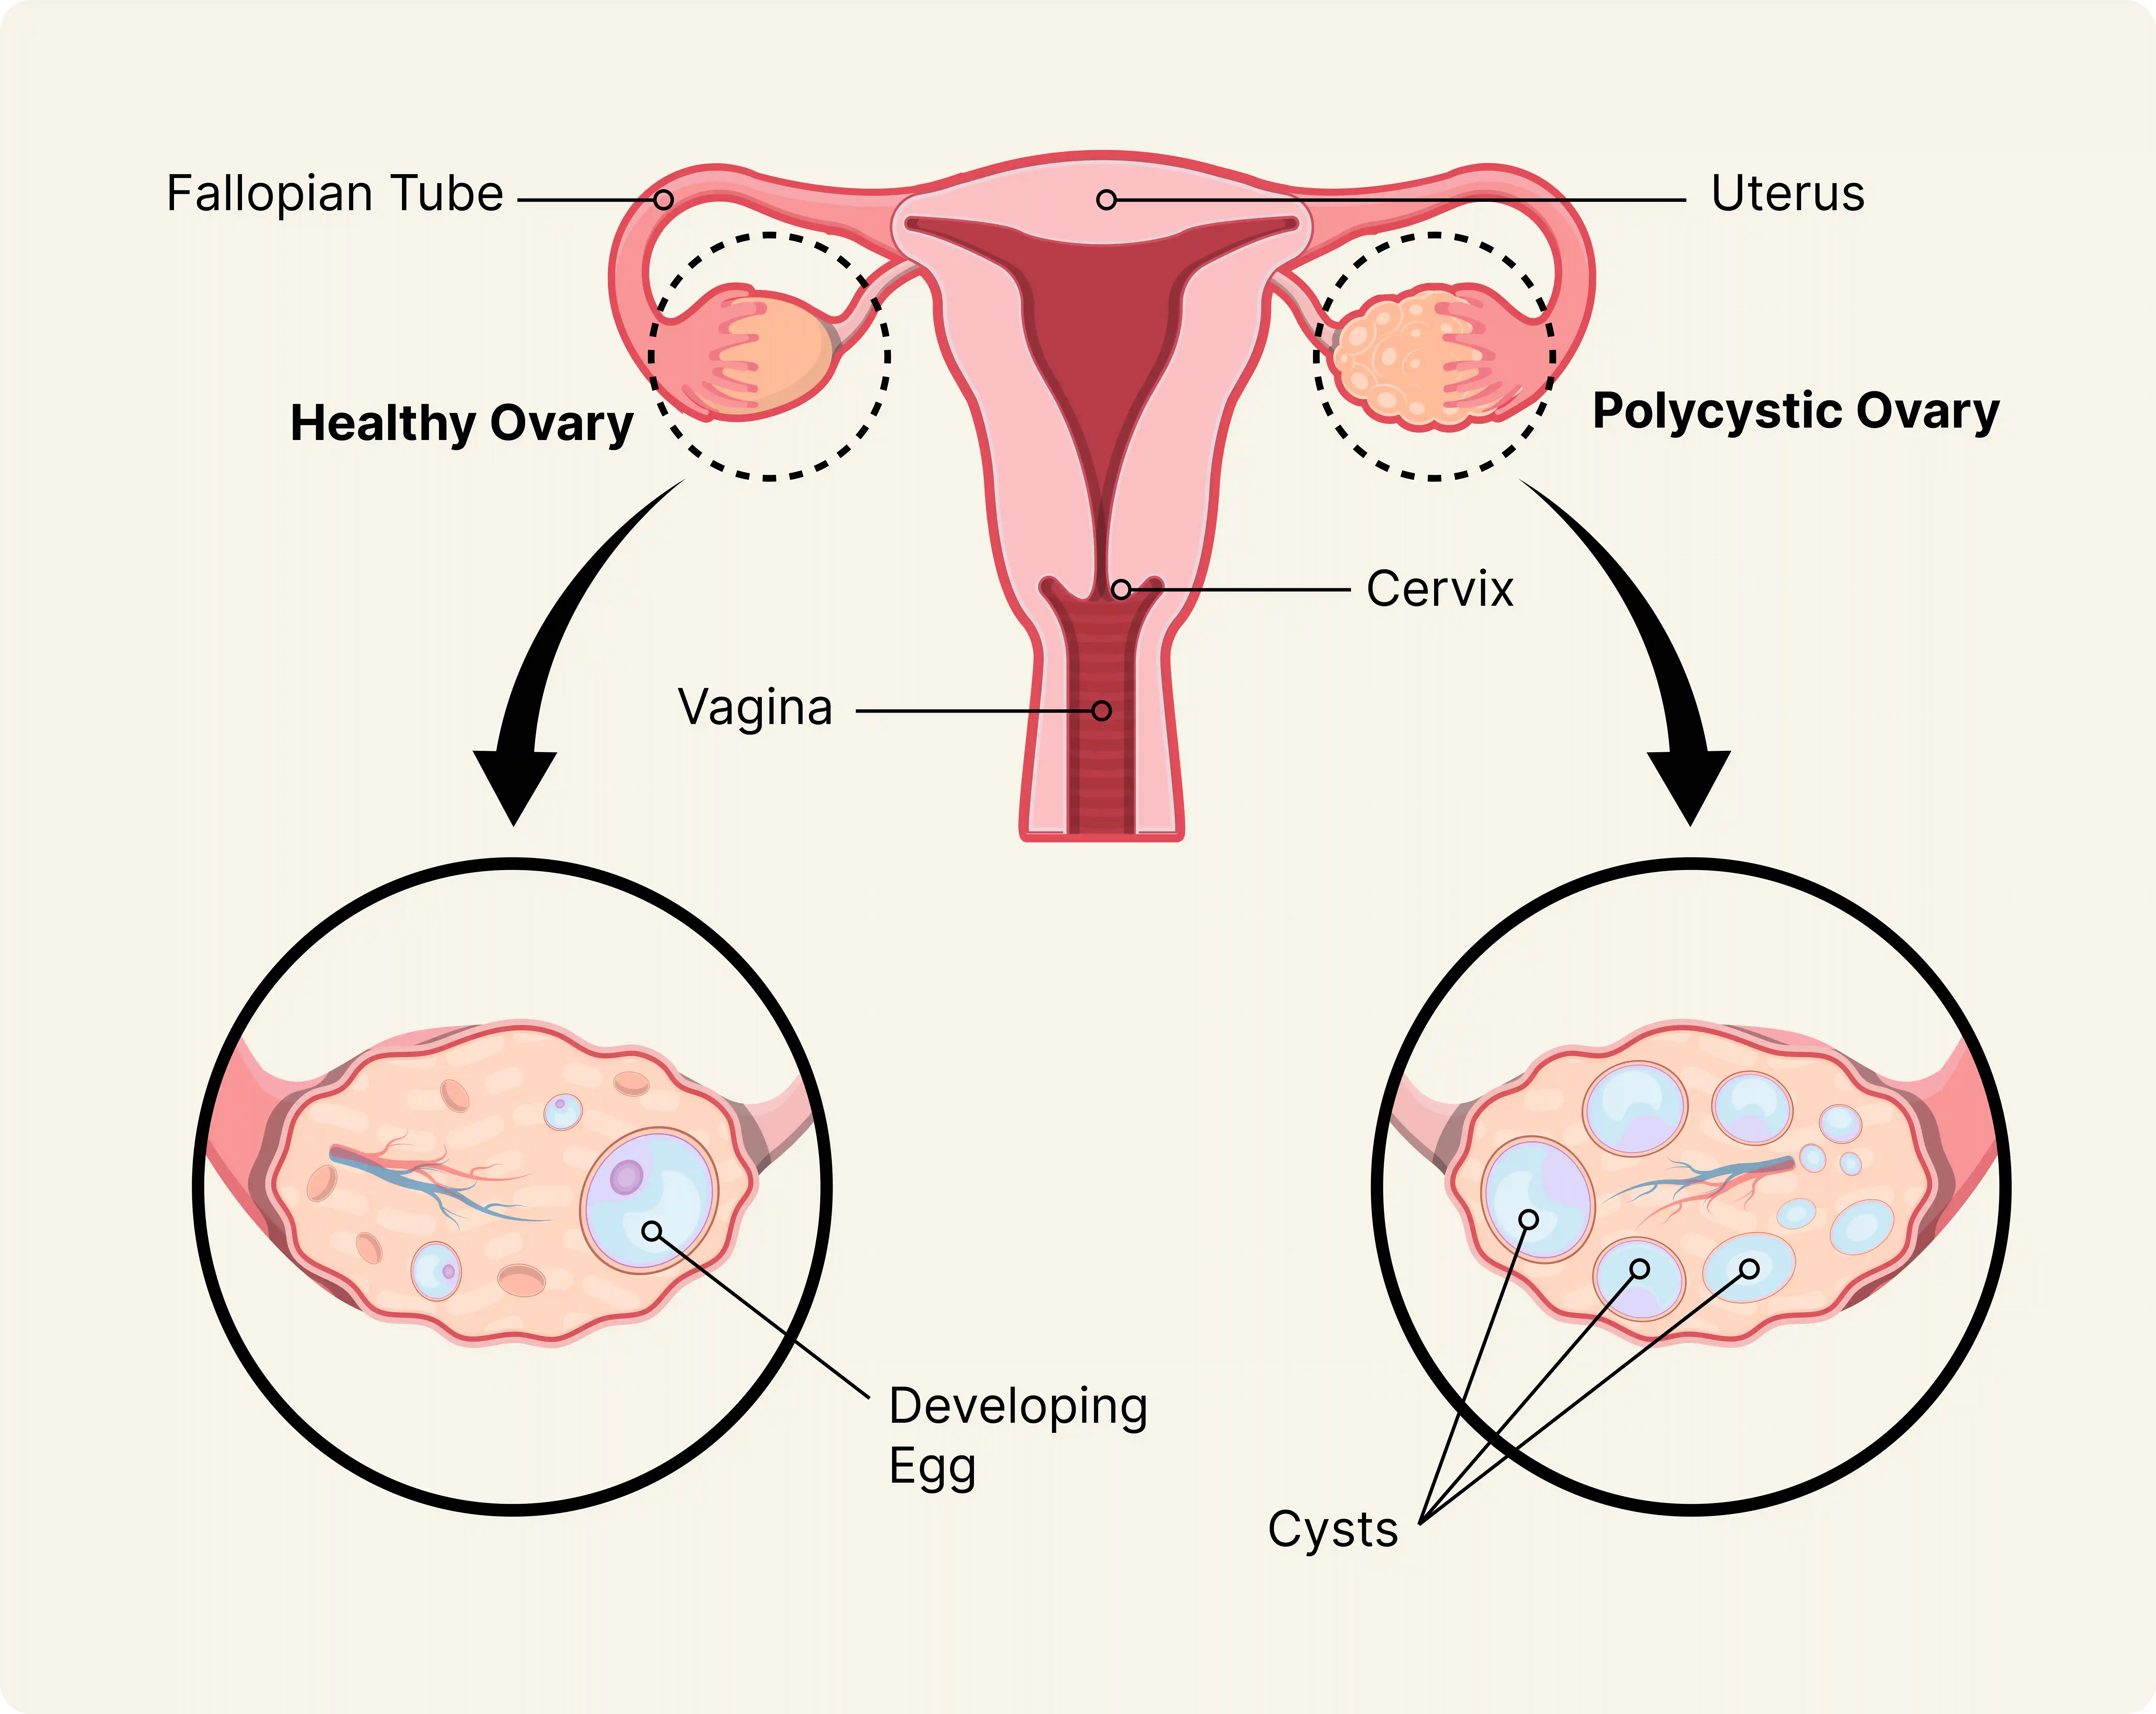 A normal ovary and a polycystic ovary.